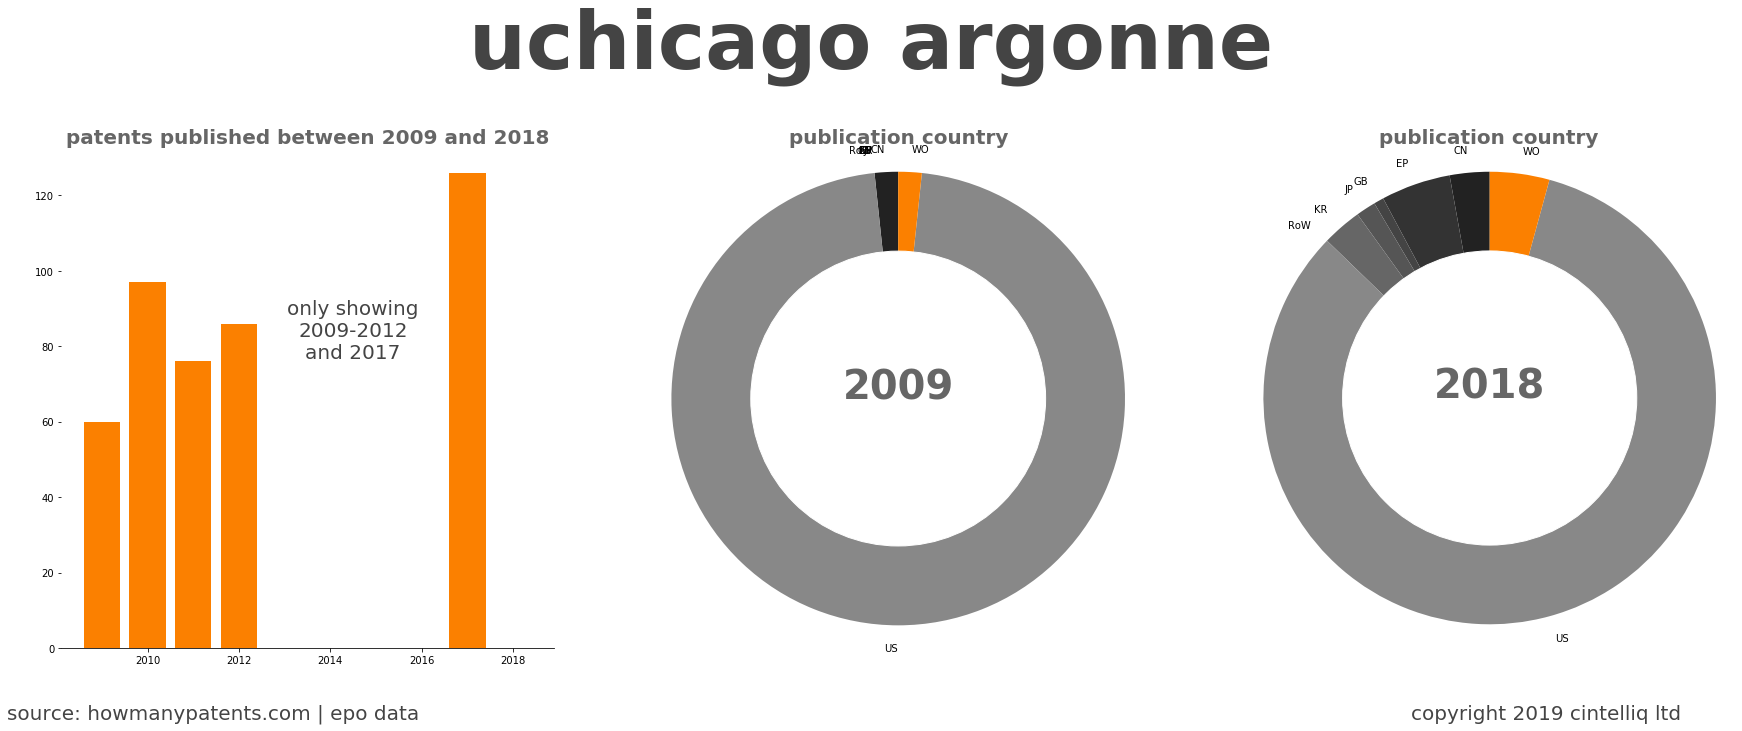 summary of patents for Uchicago Argonne